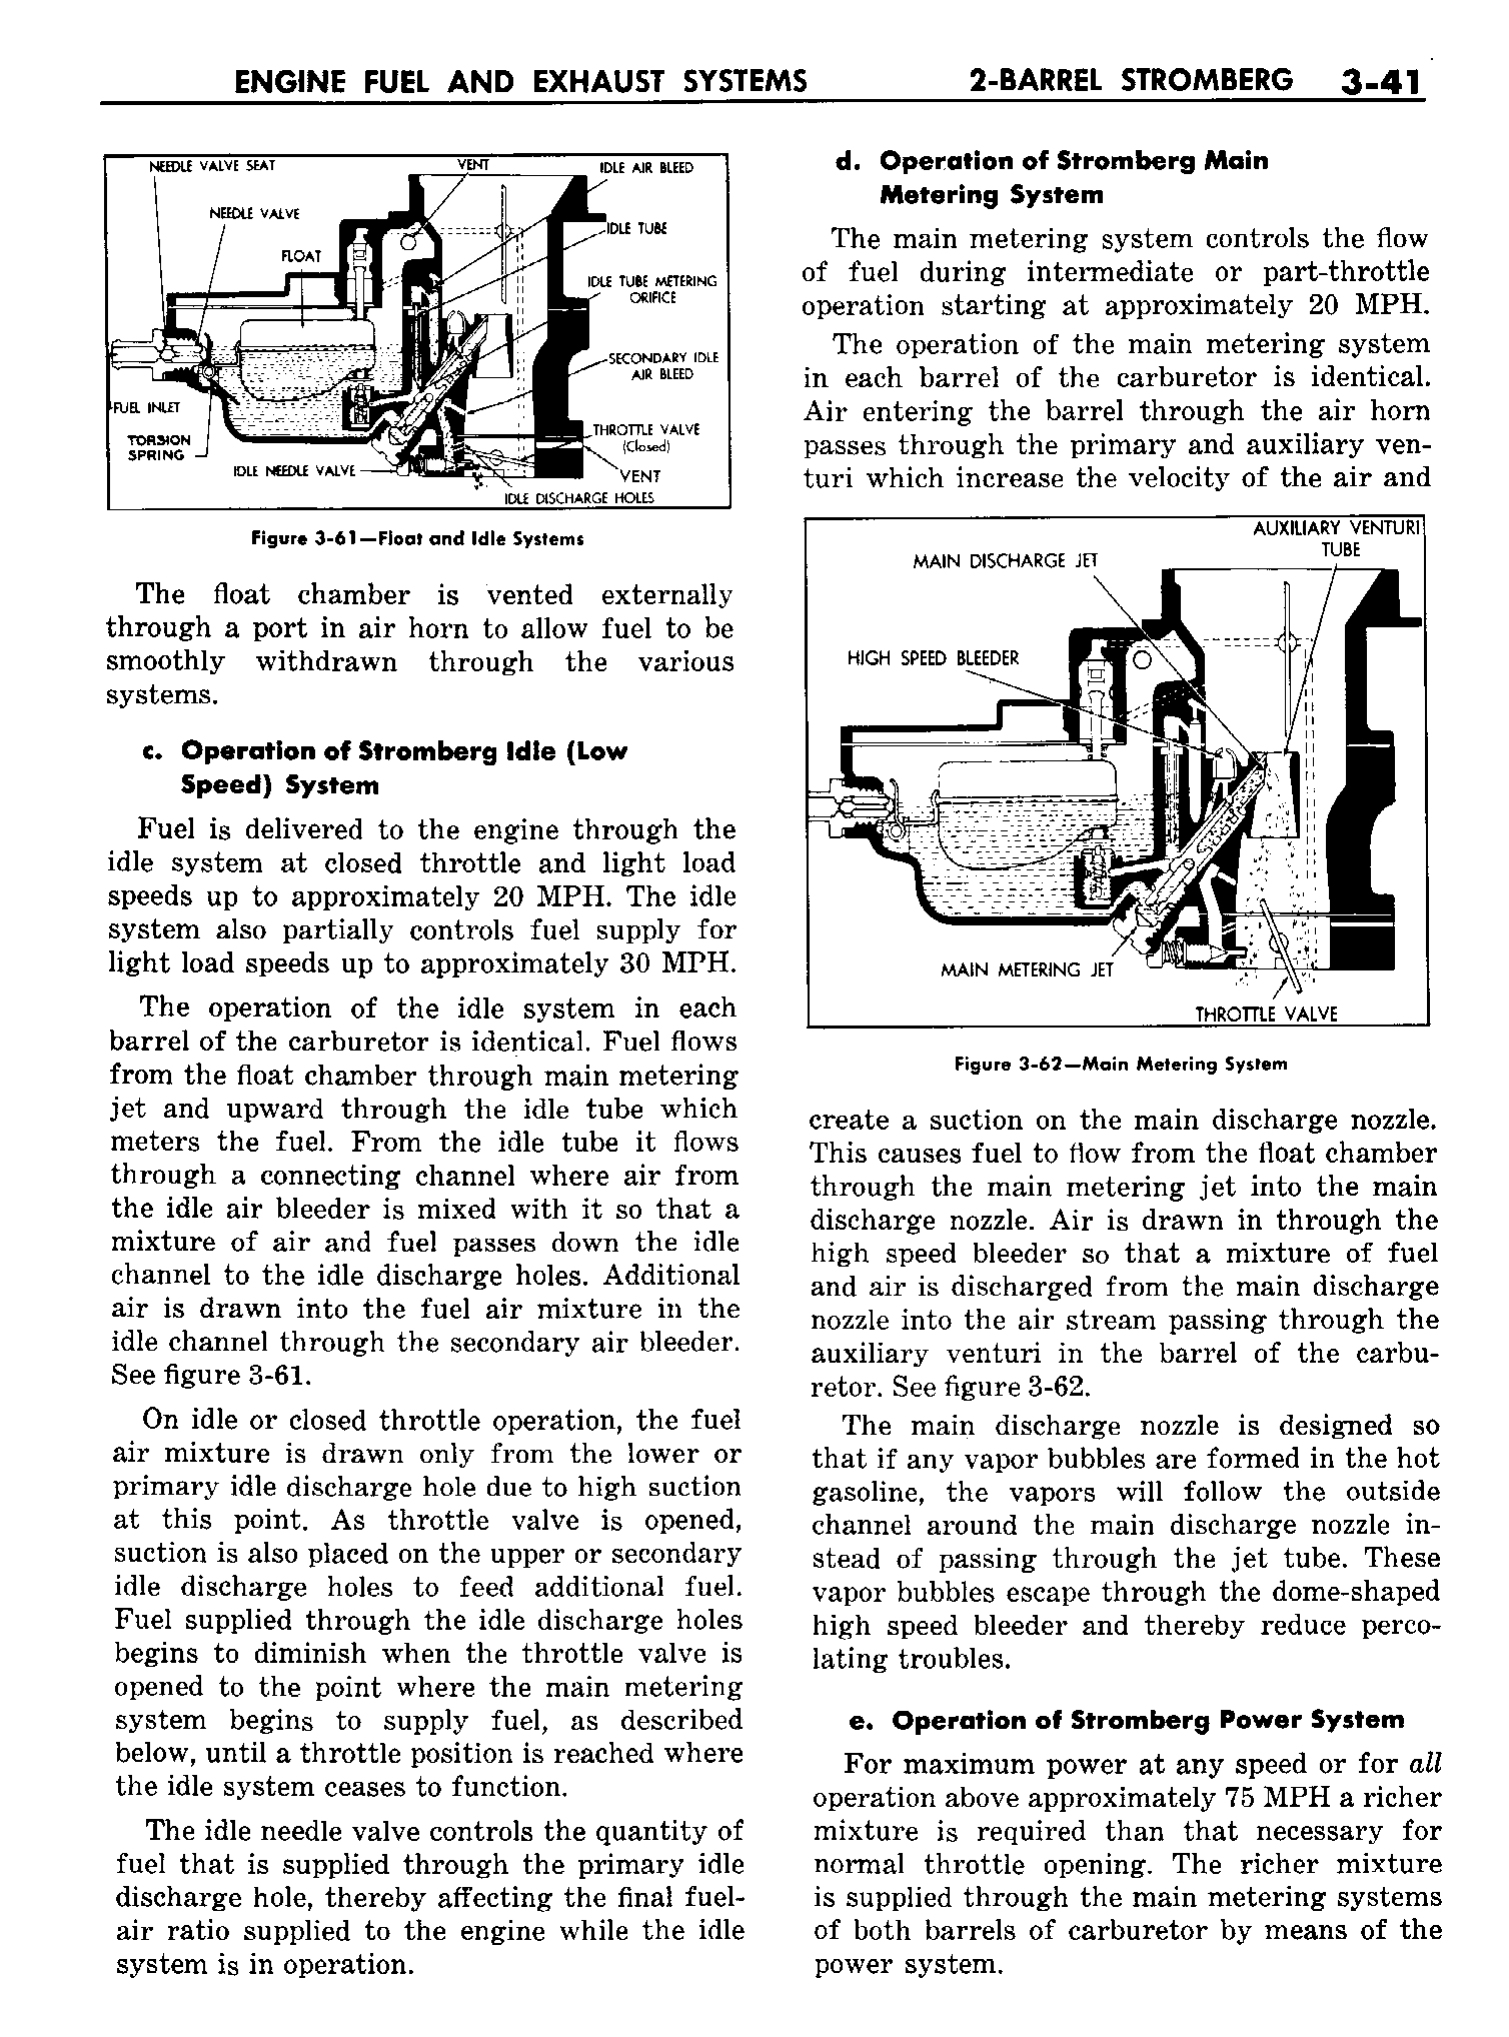 n_04 1958 Buick Shop Manual - Engine Fuel & Exhaust_41.jpg